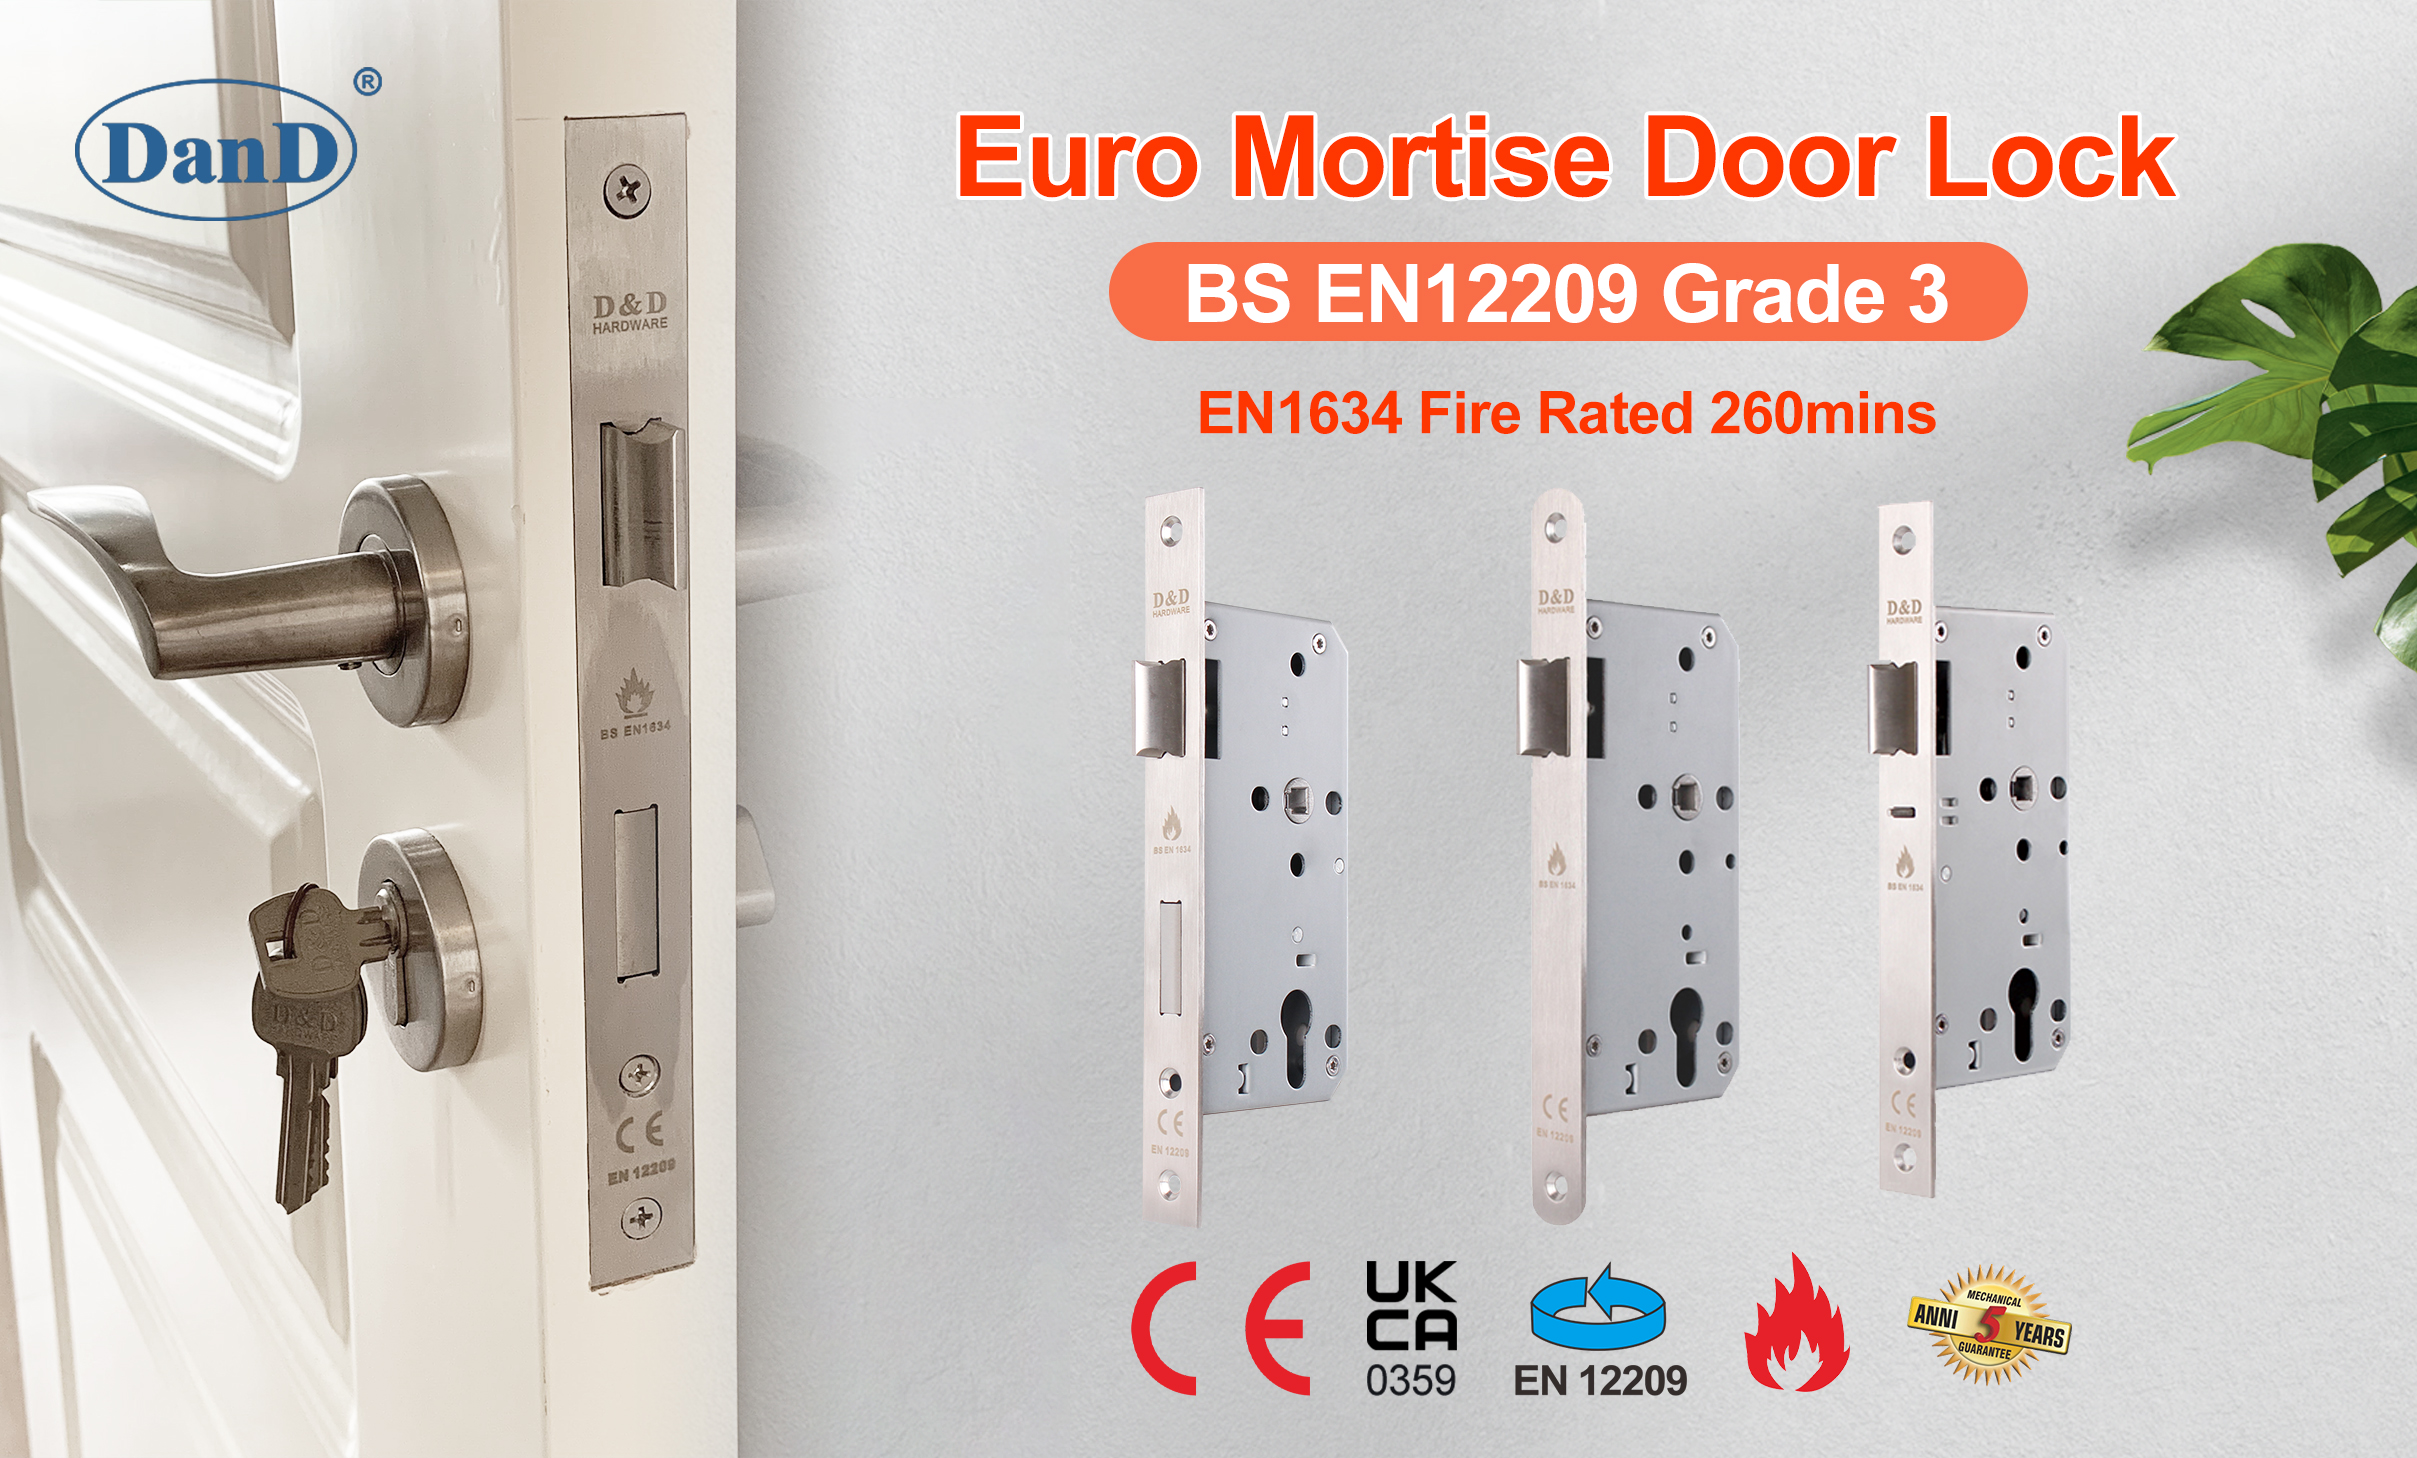 CE Mark SS304 Fire Rated Round Forend Mortise Front Door Lock-DDML009 - Buy  CE Door Lock, Mortice Sash Lock, Fire Door Lock Product on danddhardware